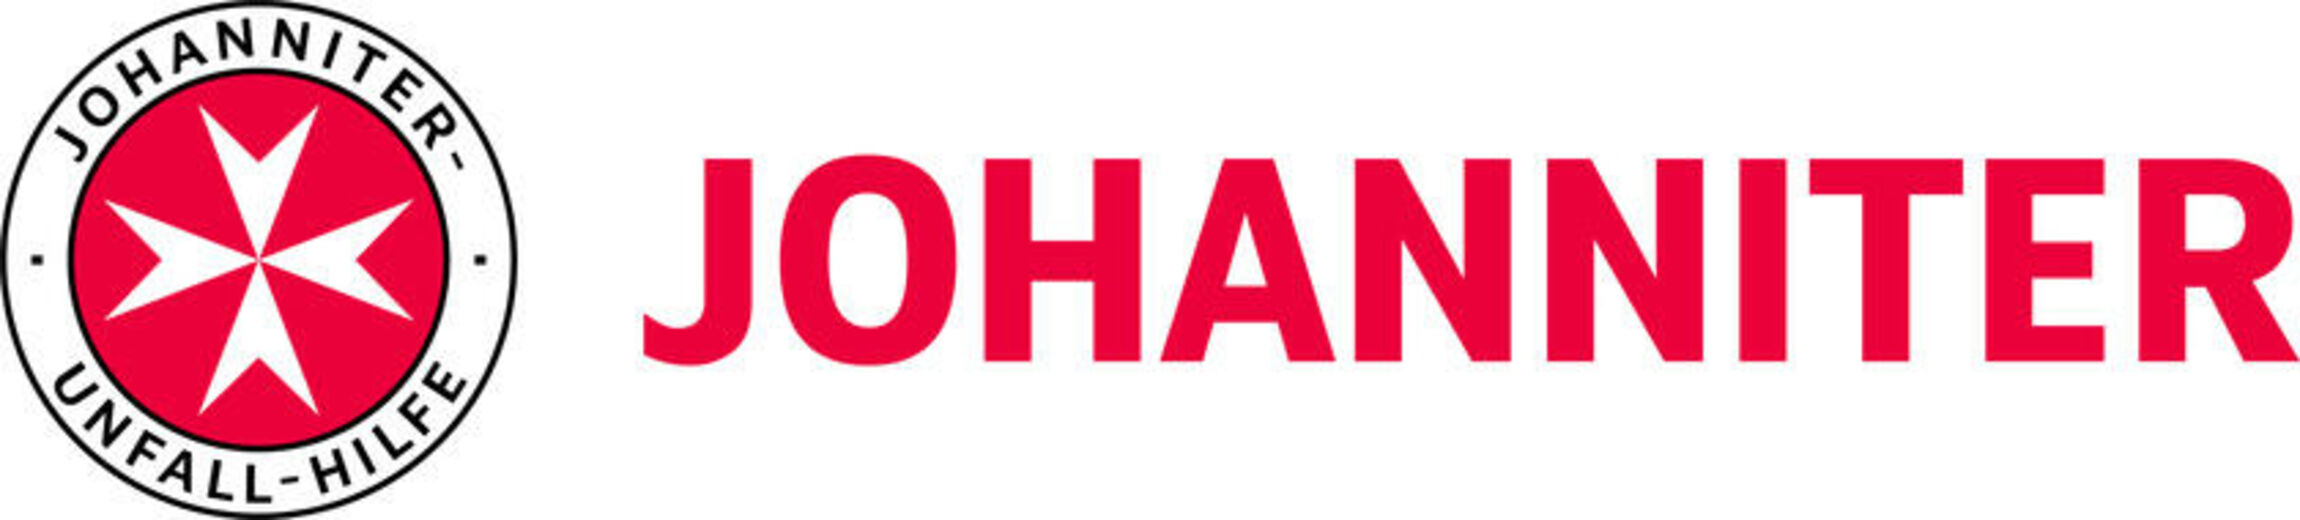 Johanniter -Logo